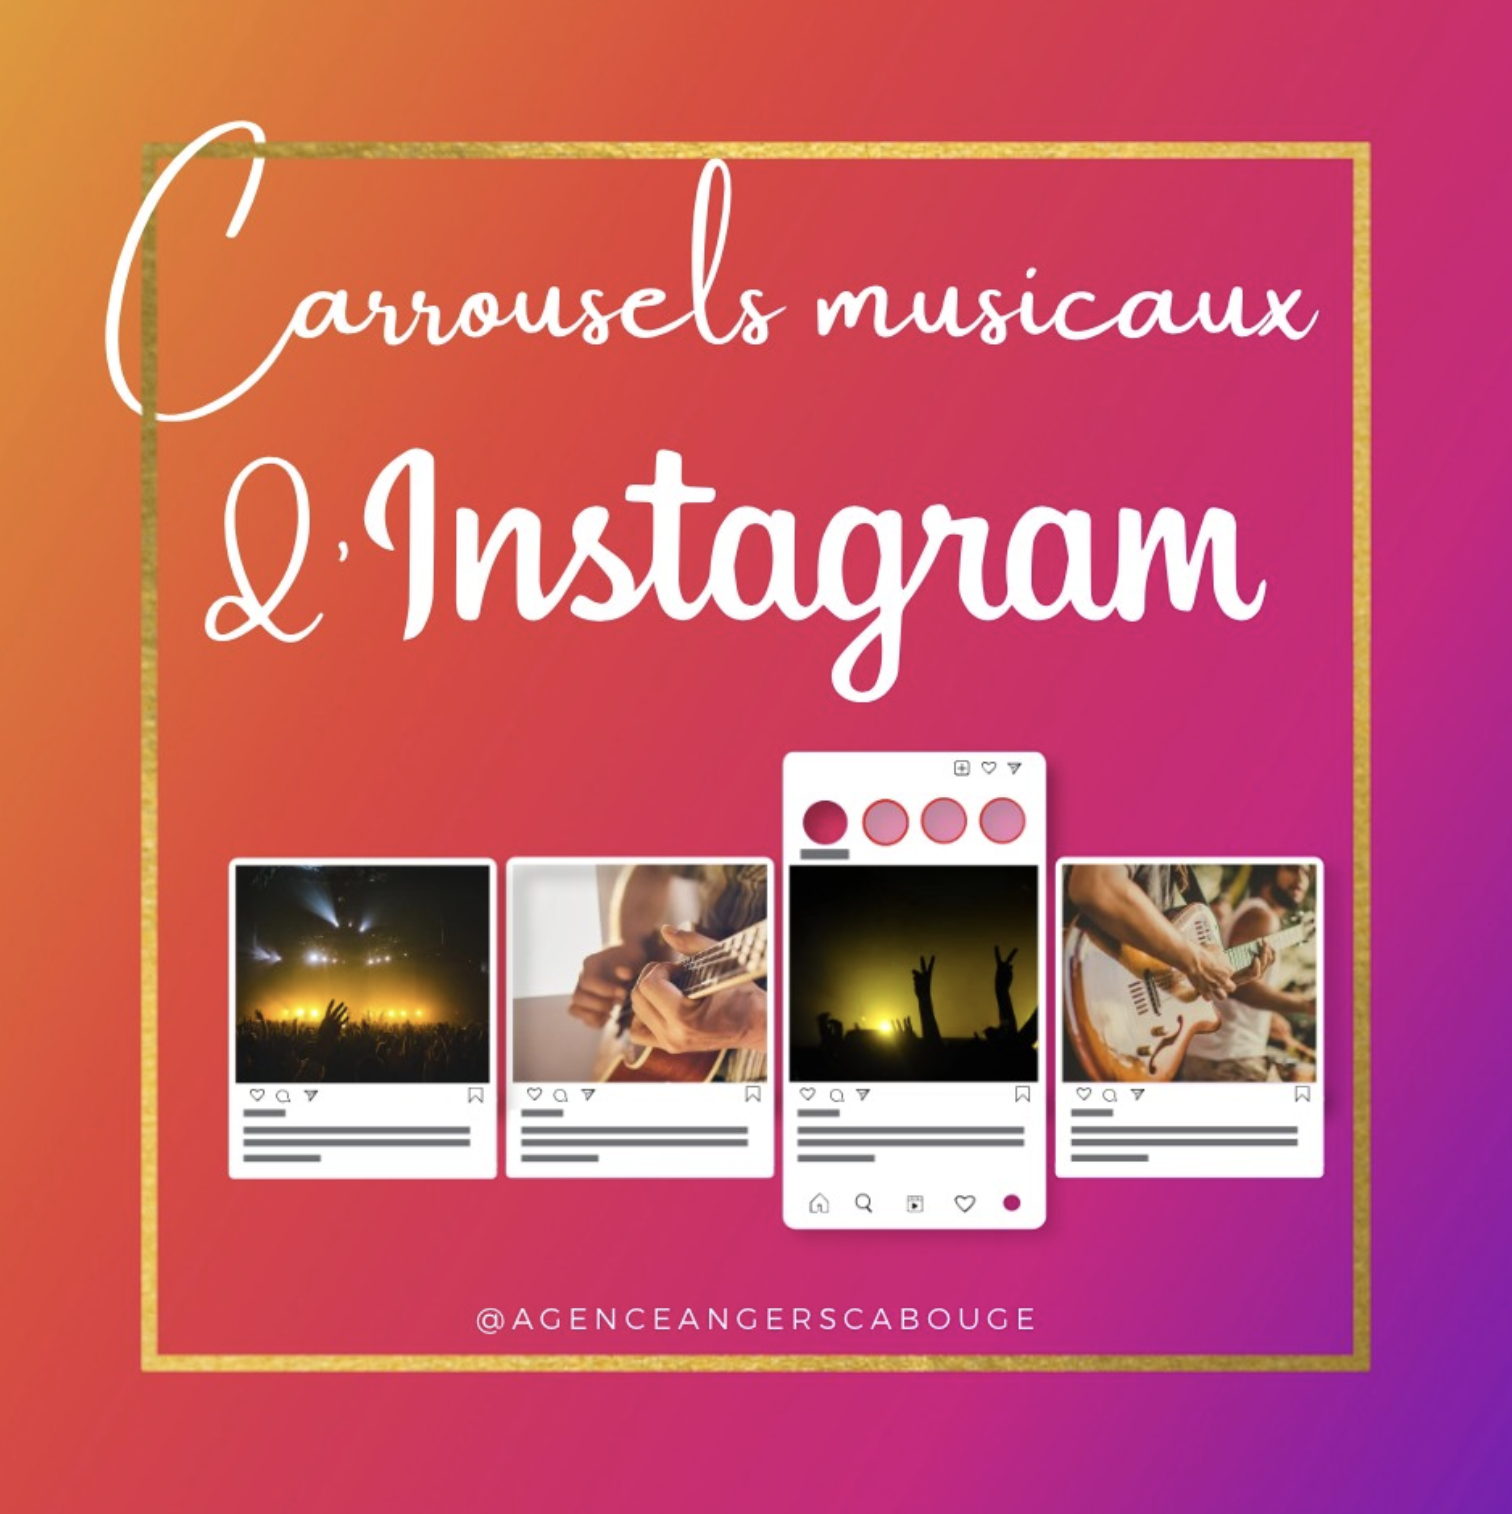 Carrousels musicaux instagram